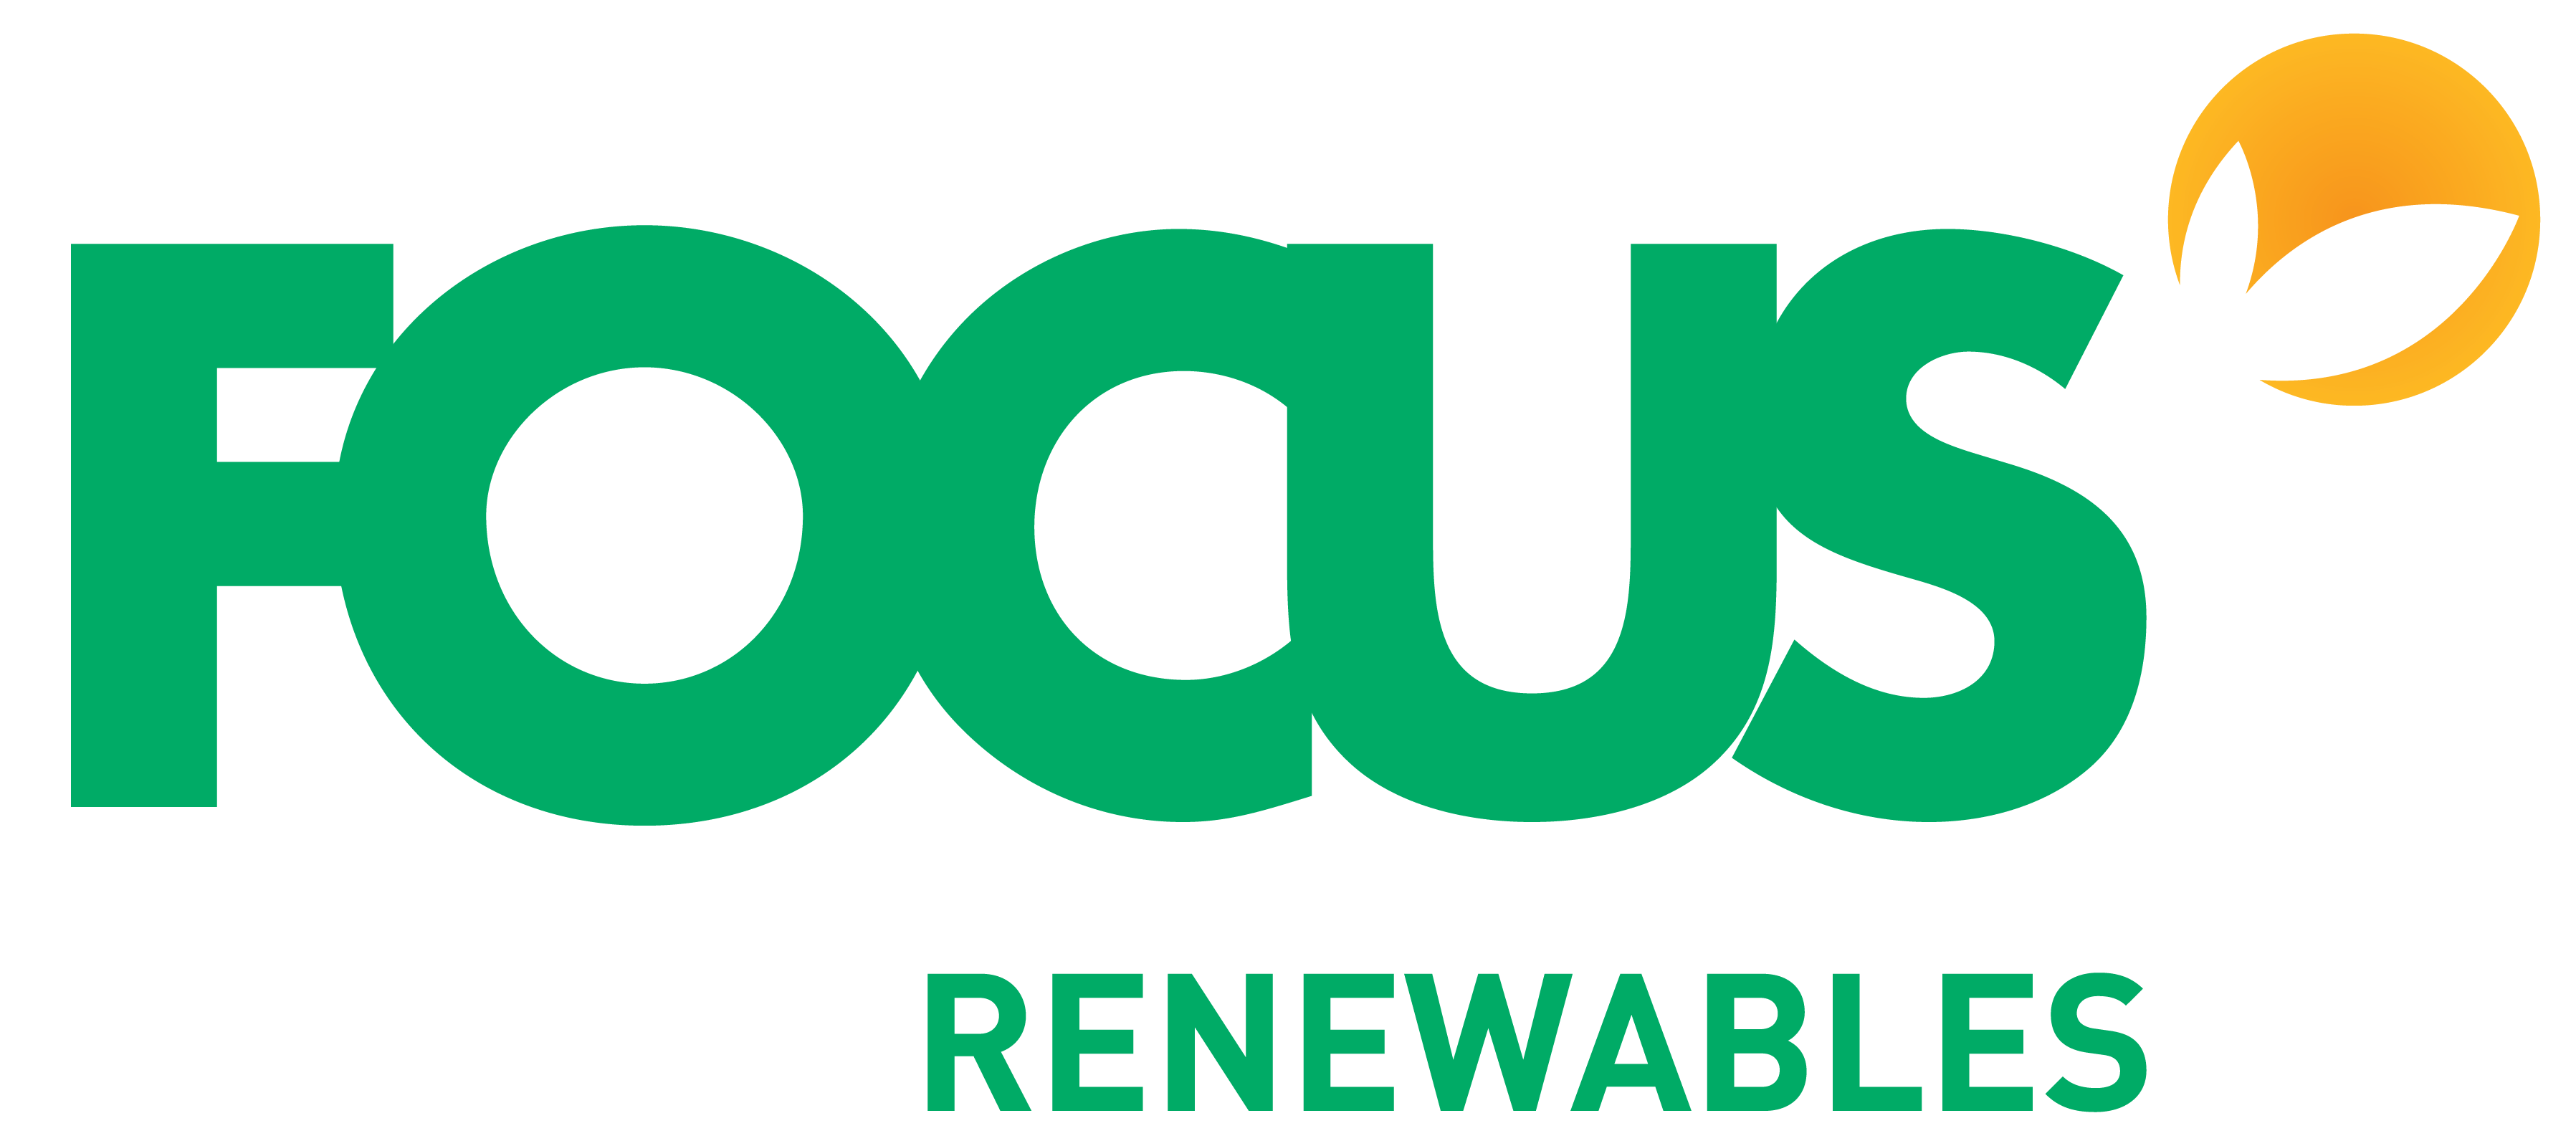 FOCUS Renewables Logo